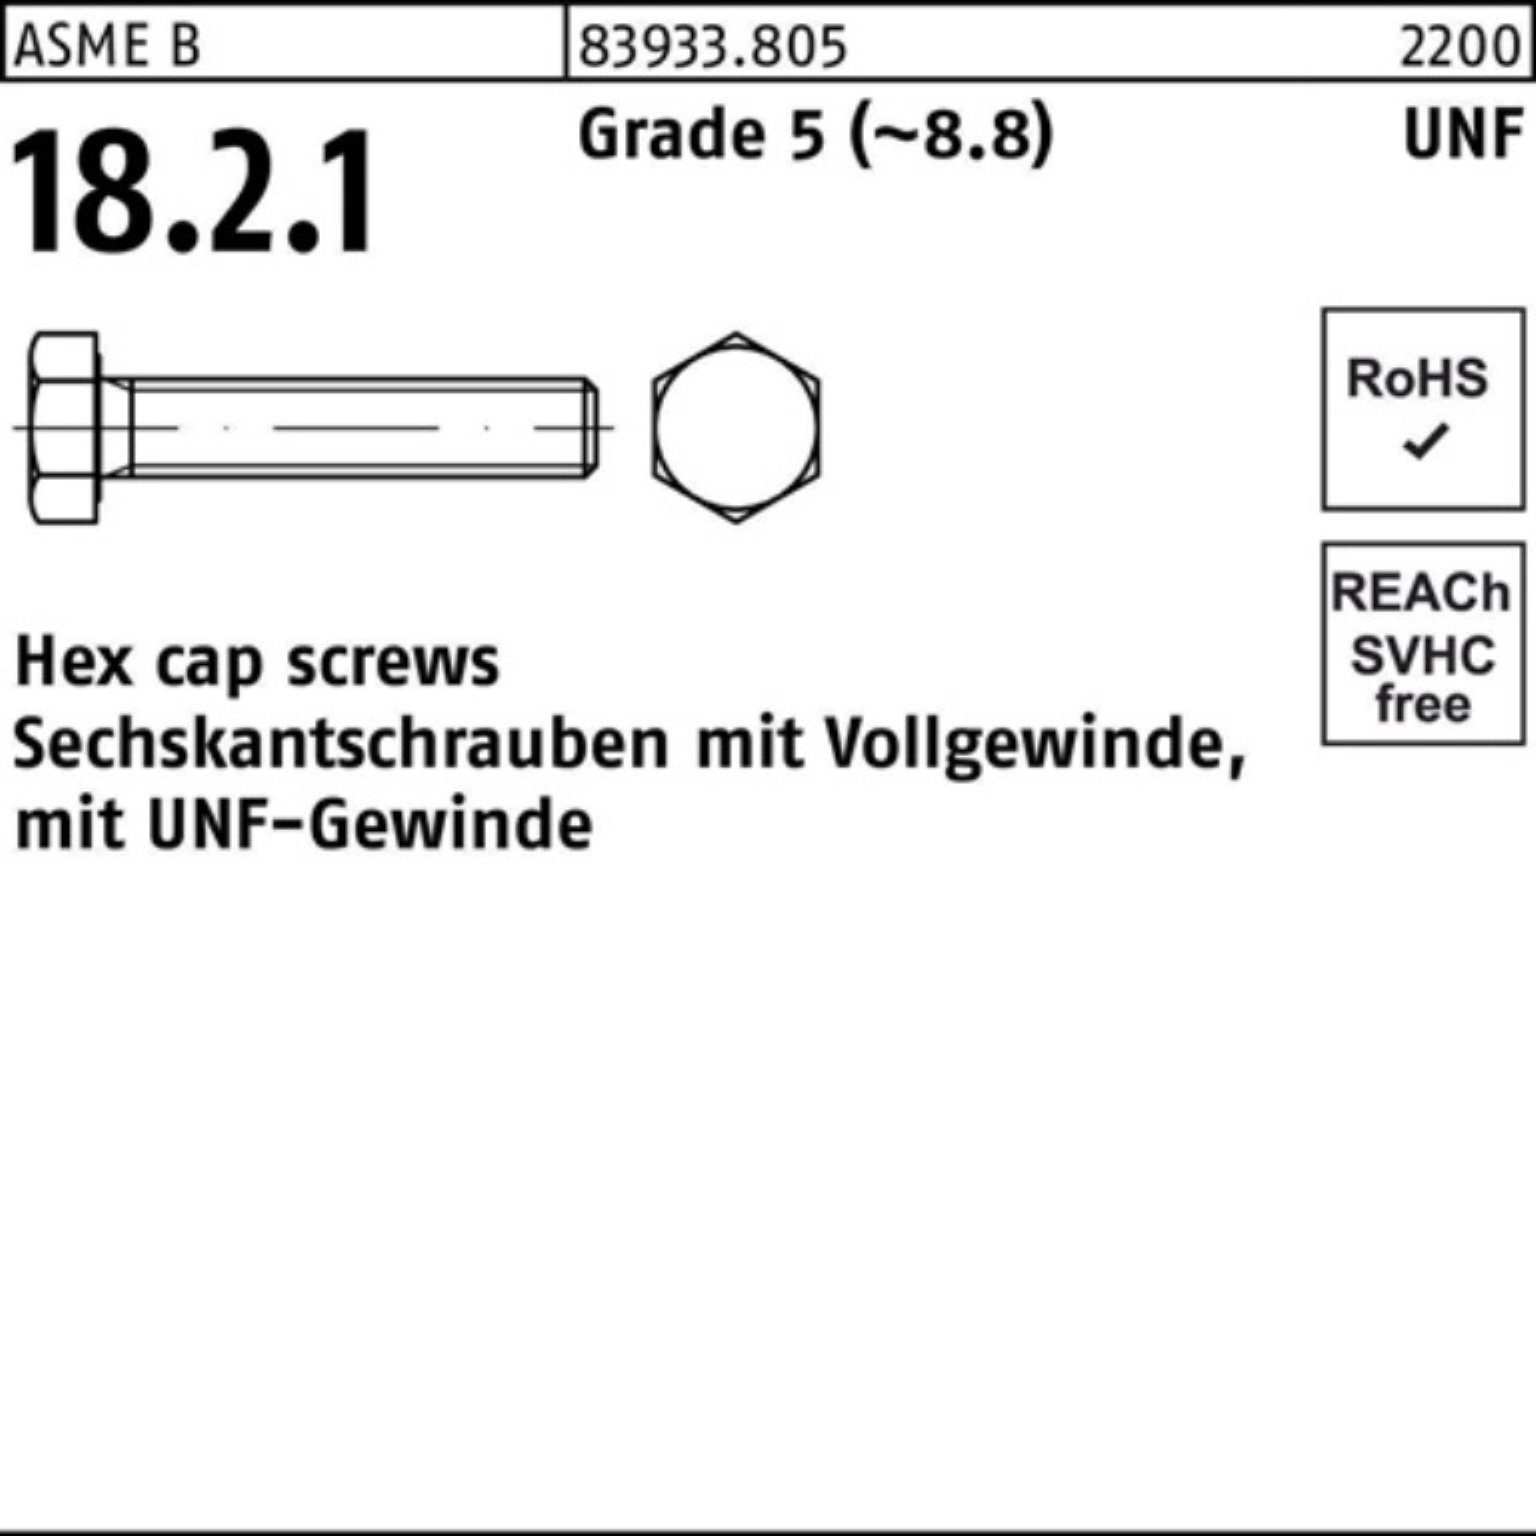 Reyher Sechskantschraube 100er Pack Sechskantschraube R 83933 UNF-Gewinde VG 1/2x 7/8 Grade 5